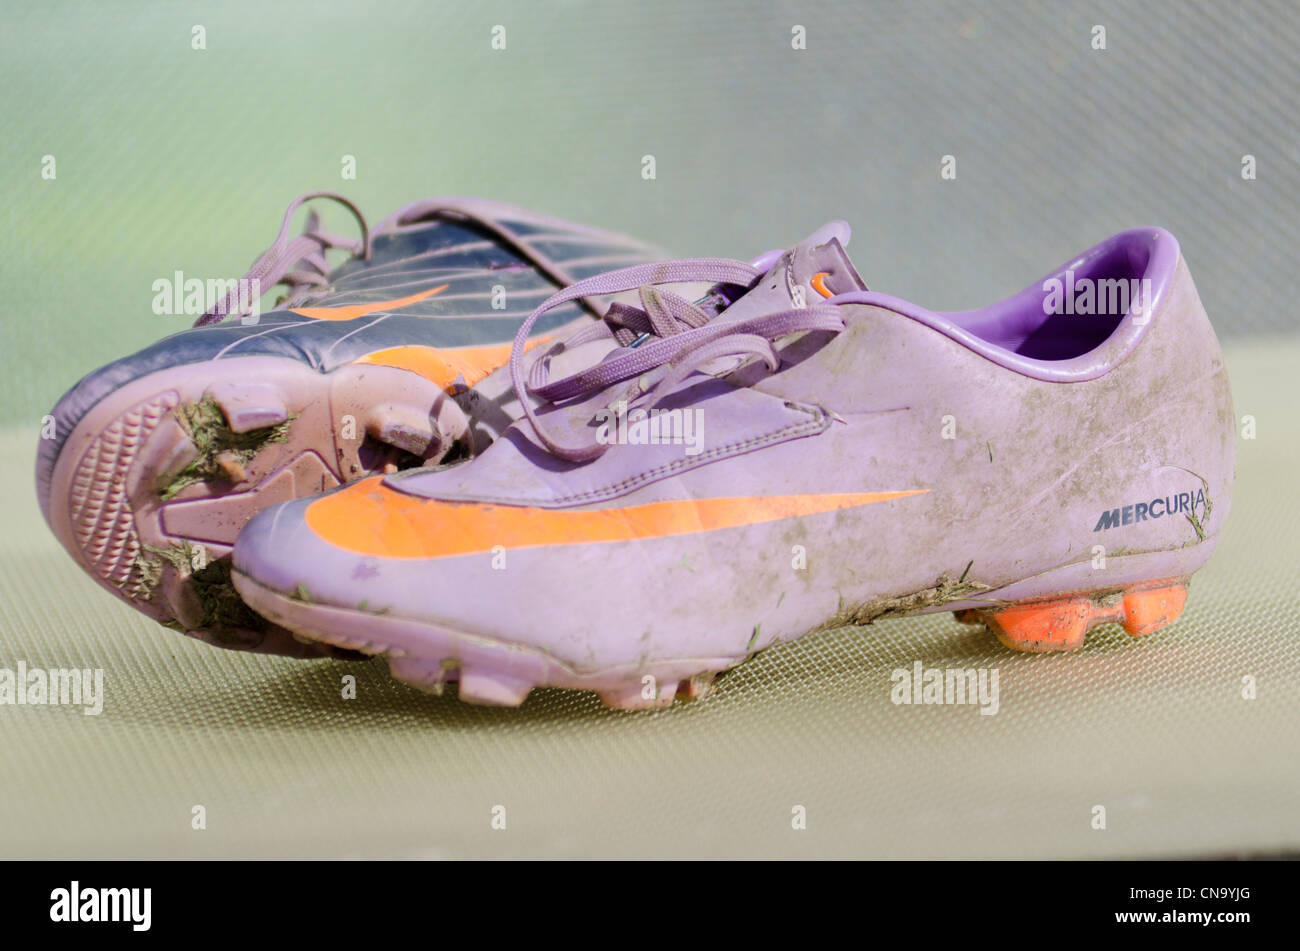 Worn Pair of Nike Football Boots Stock Photo - Alamy